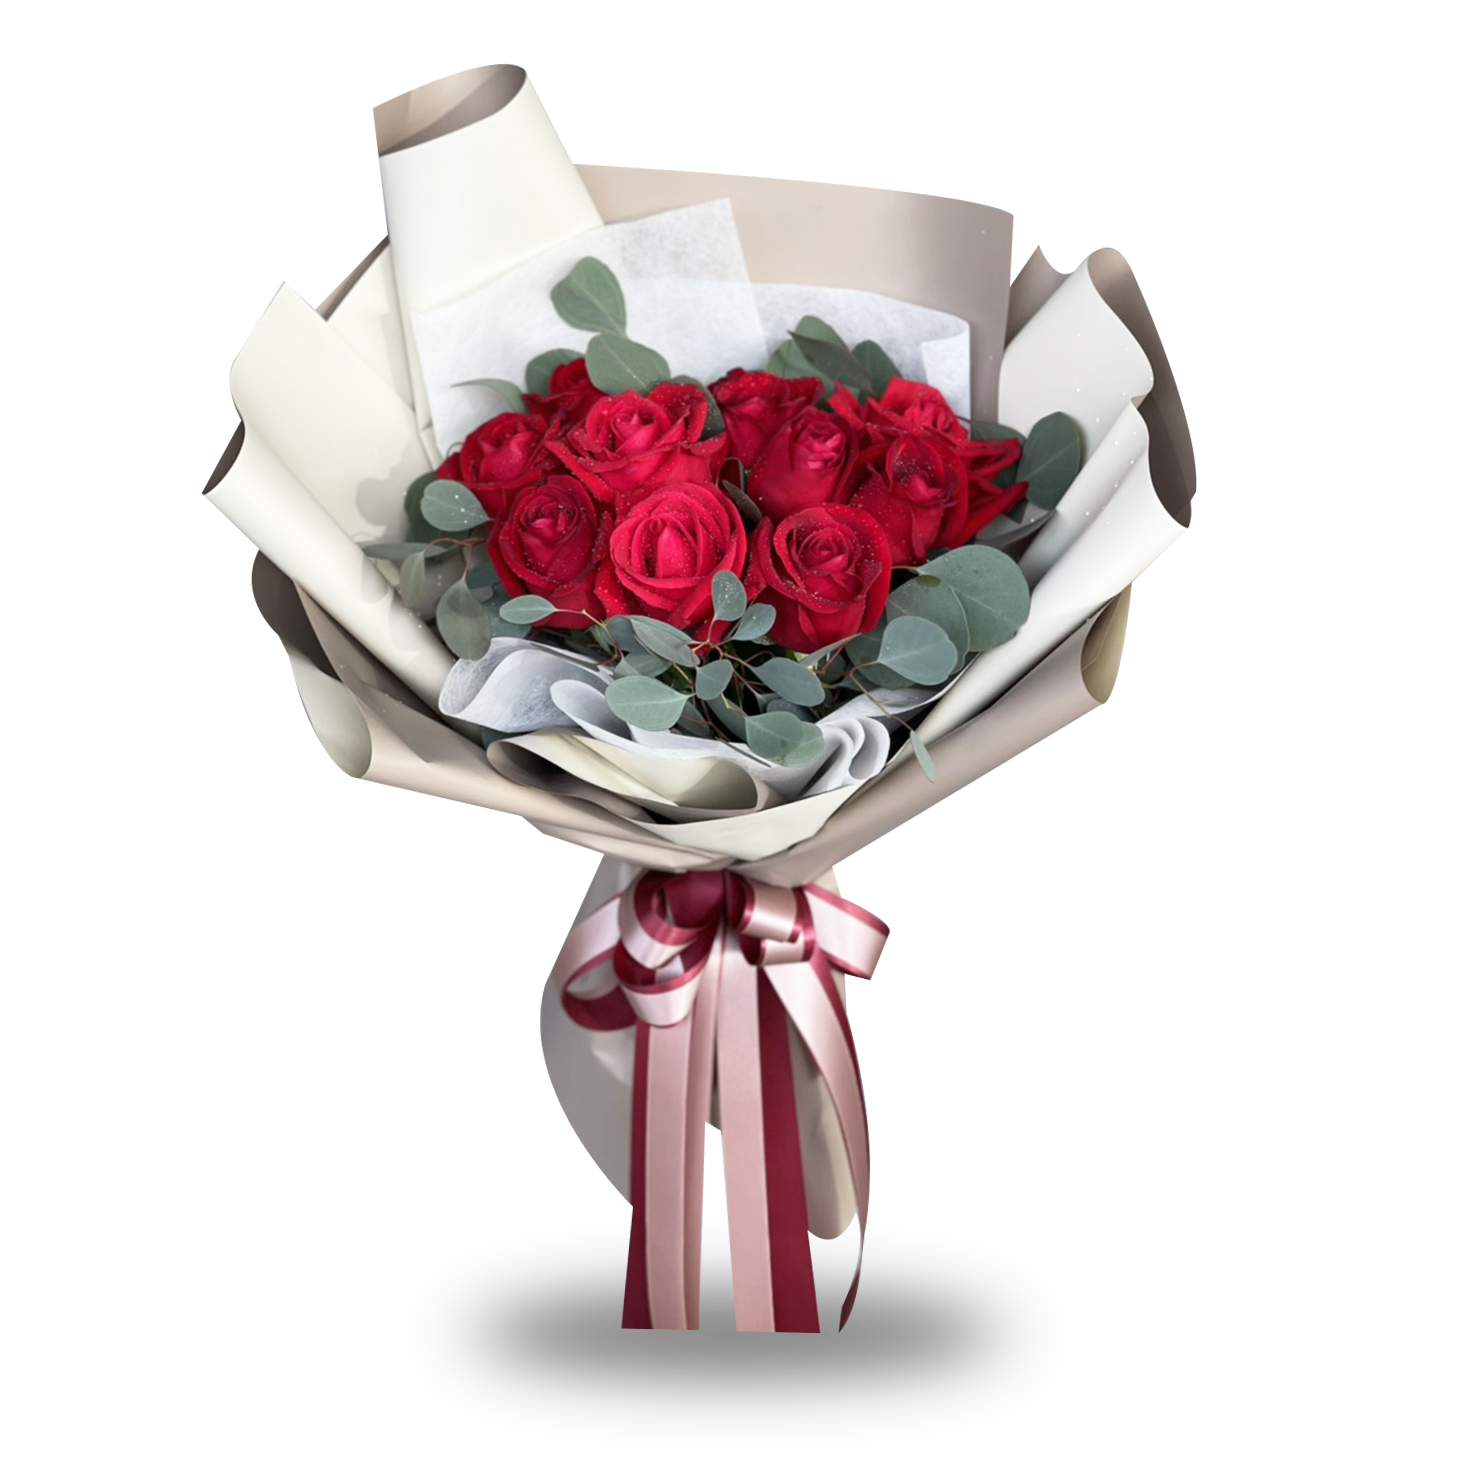 "Romantic Love" 10 Red Roses Bouquet